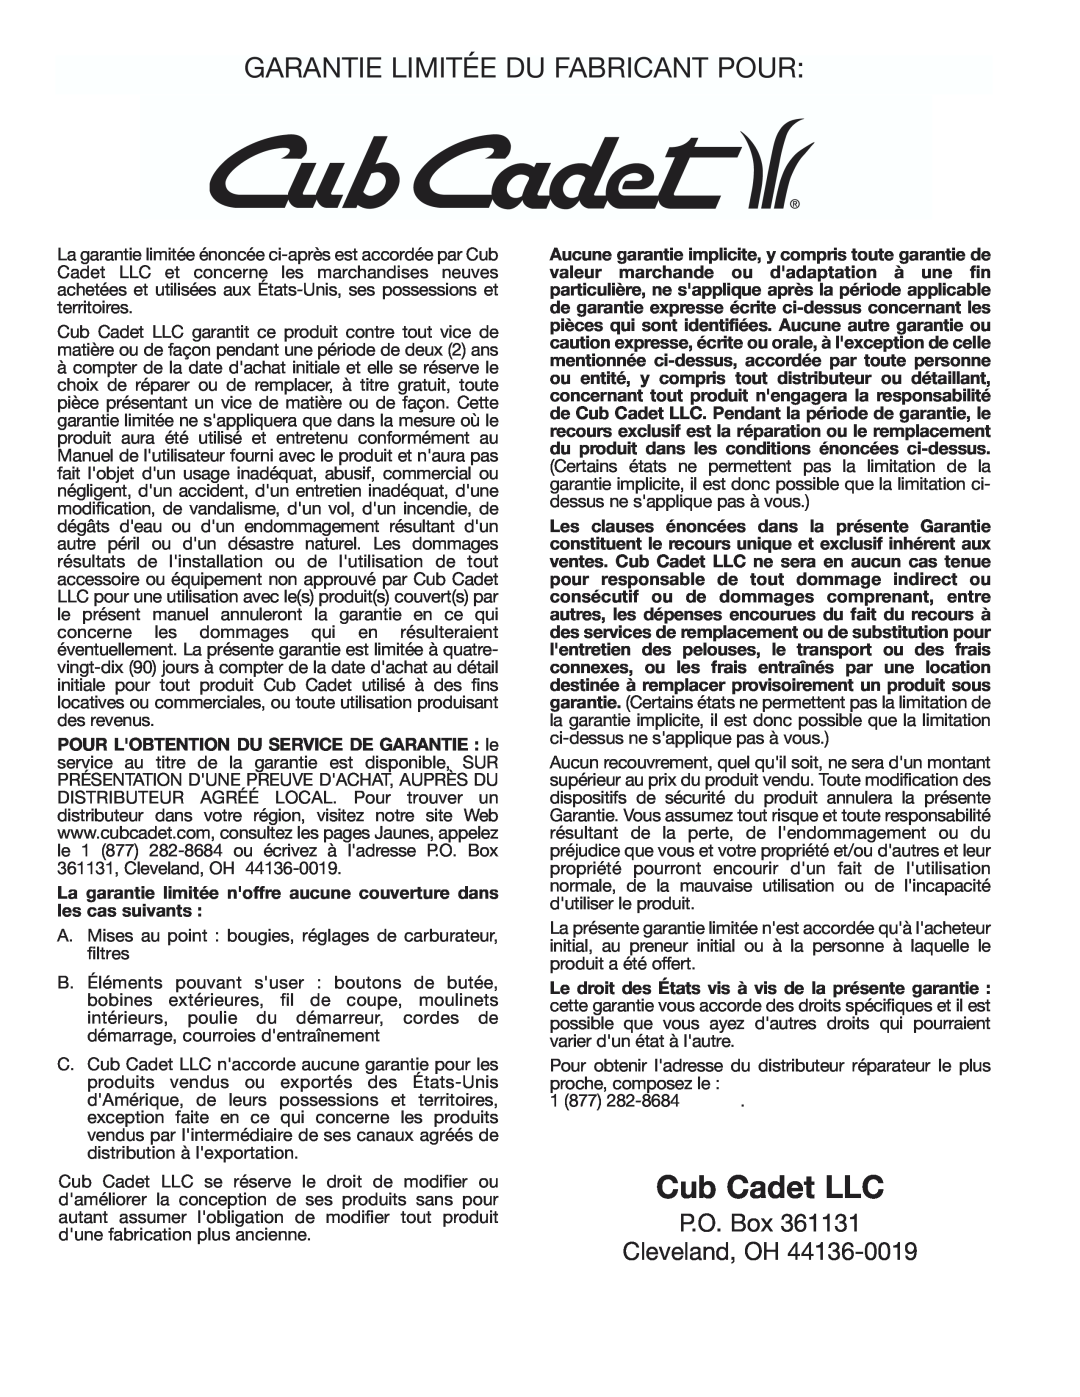 Cub Cadet CC3000 manual Garantie Limitée Du Fabricant Pour, Cub Cadet LLC, P.O. Box Cleveland, OH 